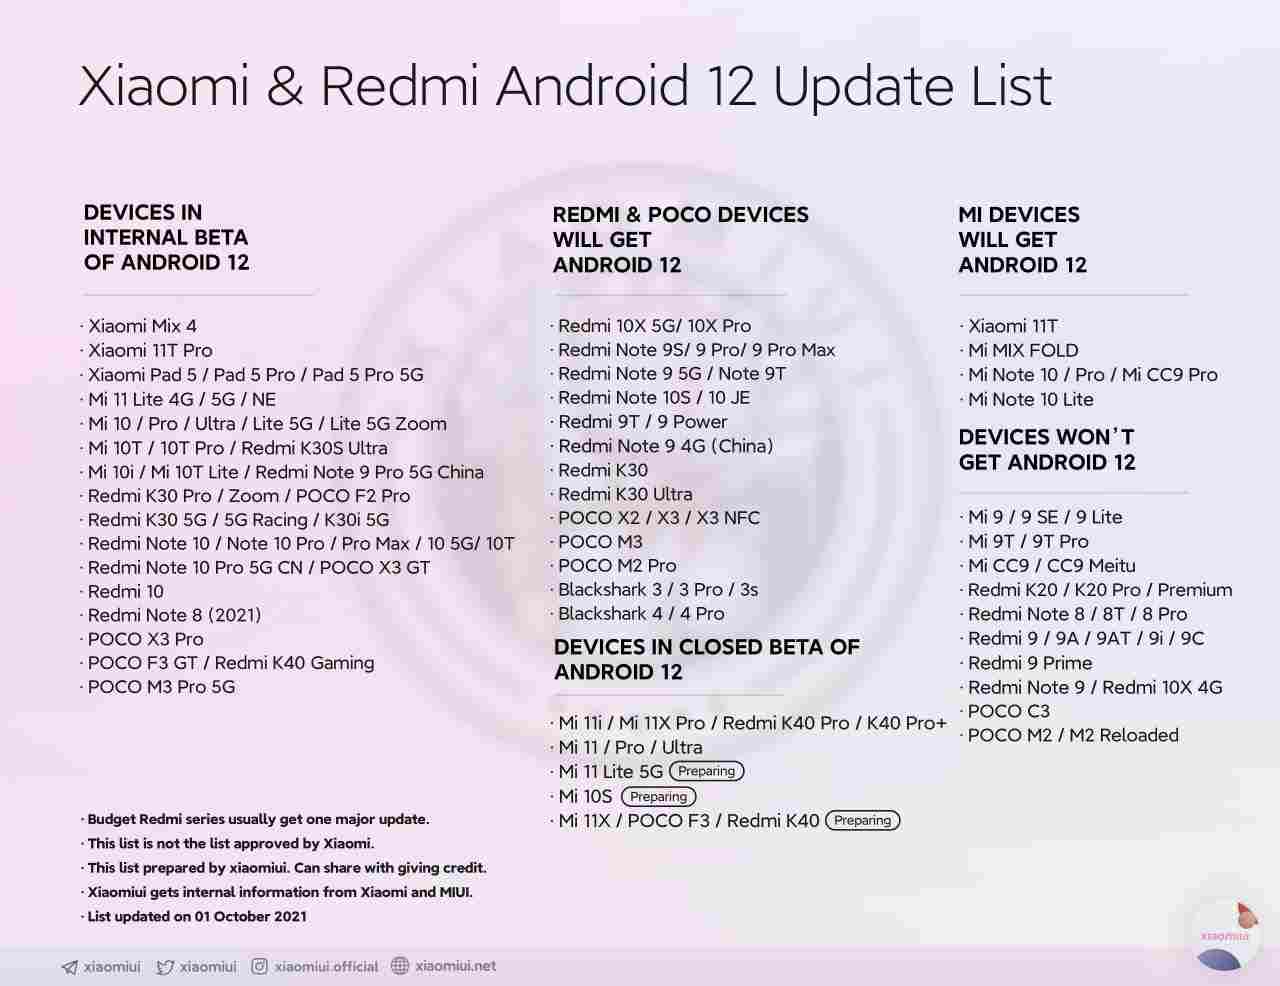 Redmi Note 10 5G / POCO M3 Pro, Mi 10 Lite, Mi 10i / Mi 10T Lite Android 12 beta testing has started